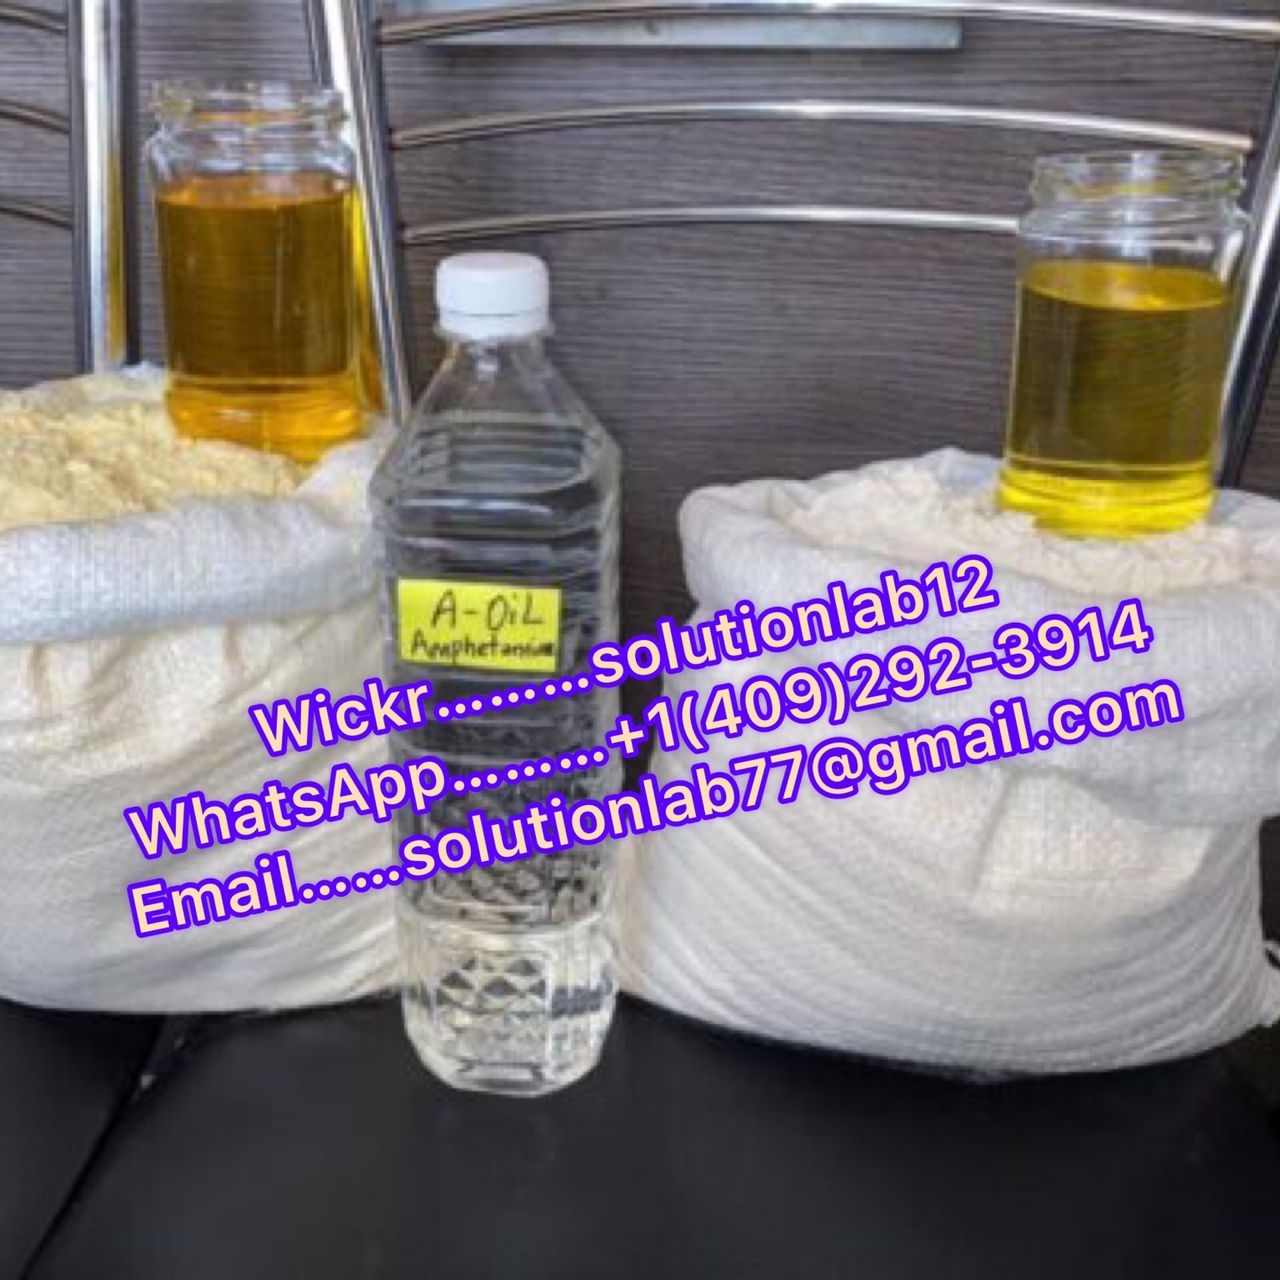 BUY PMK Methyl Glycidate Online,Buy Pmk Oil CAS 28578-16-7 – Order PMK Glycidic Acid Online – Purchase PMK Powder